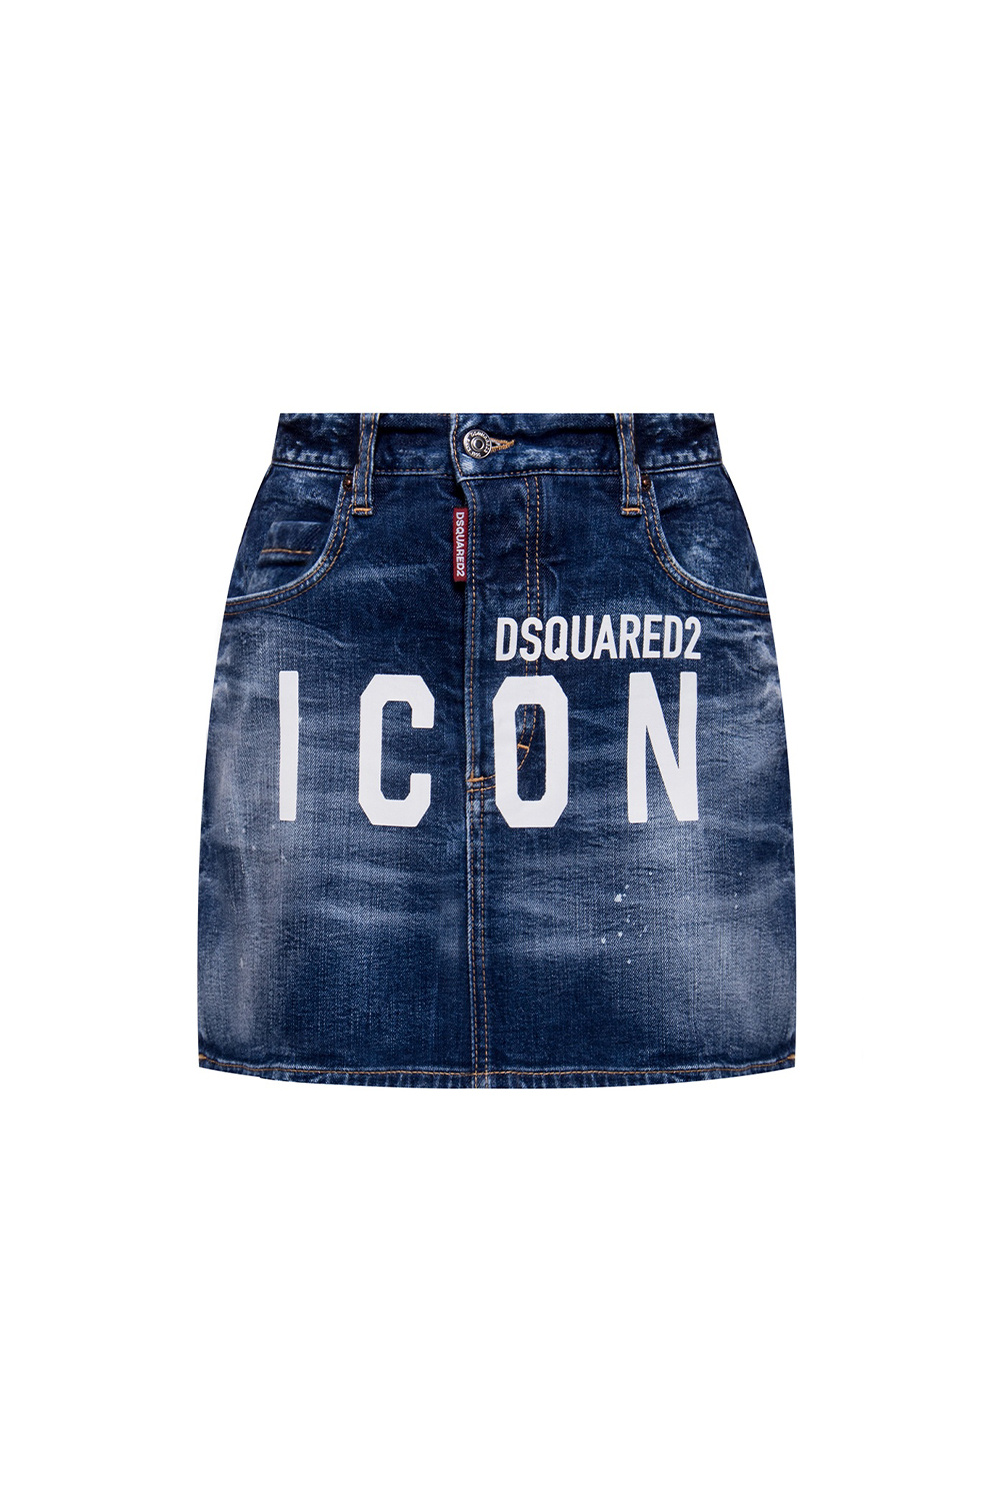 Dsquared2 Denim skirt with logo